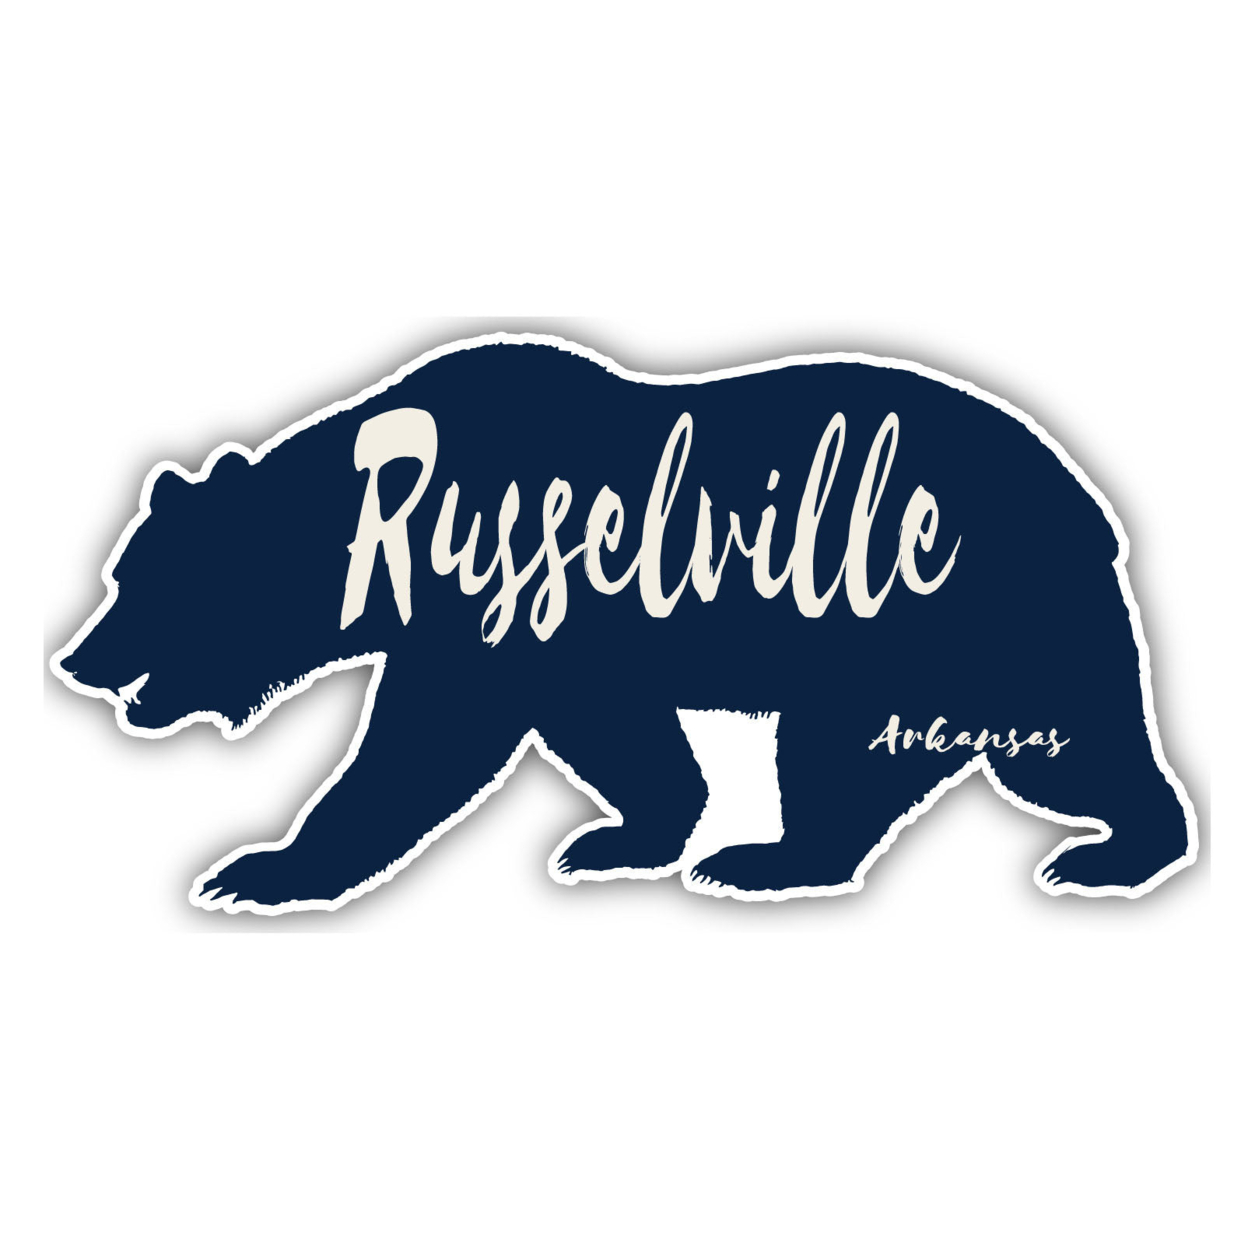 Russelville Arkansas Souvenir Decorative Stickers (Choose Theme And Size) - Single Unit, 4-Inch, Bear